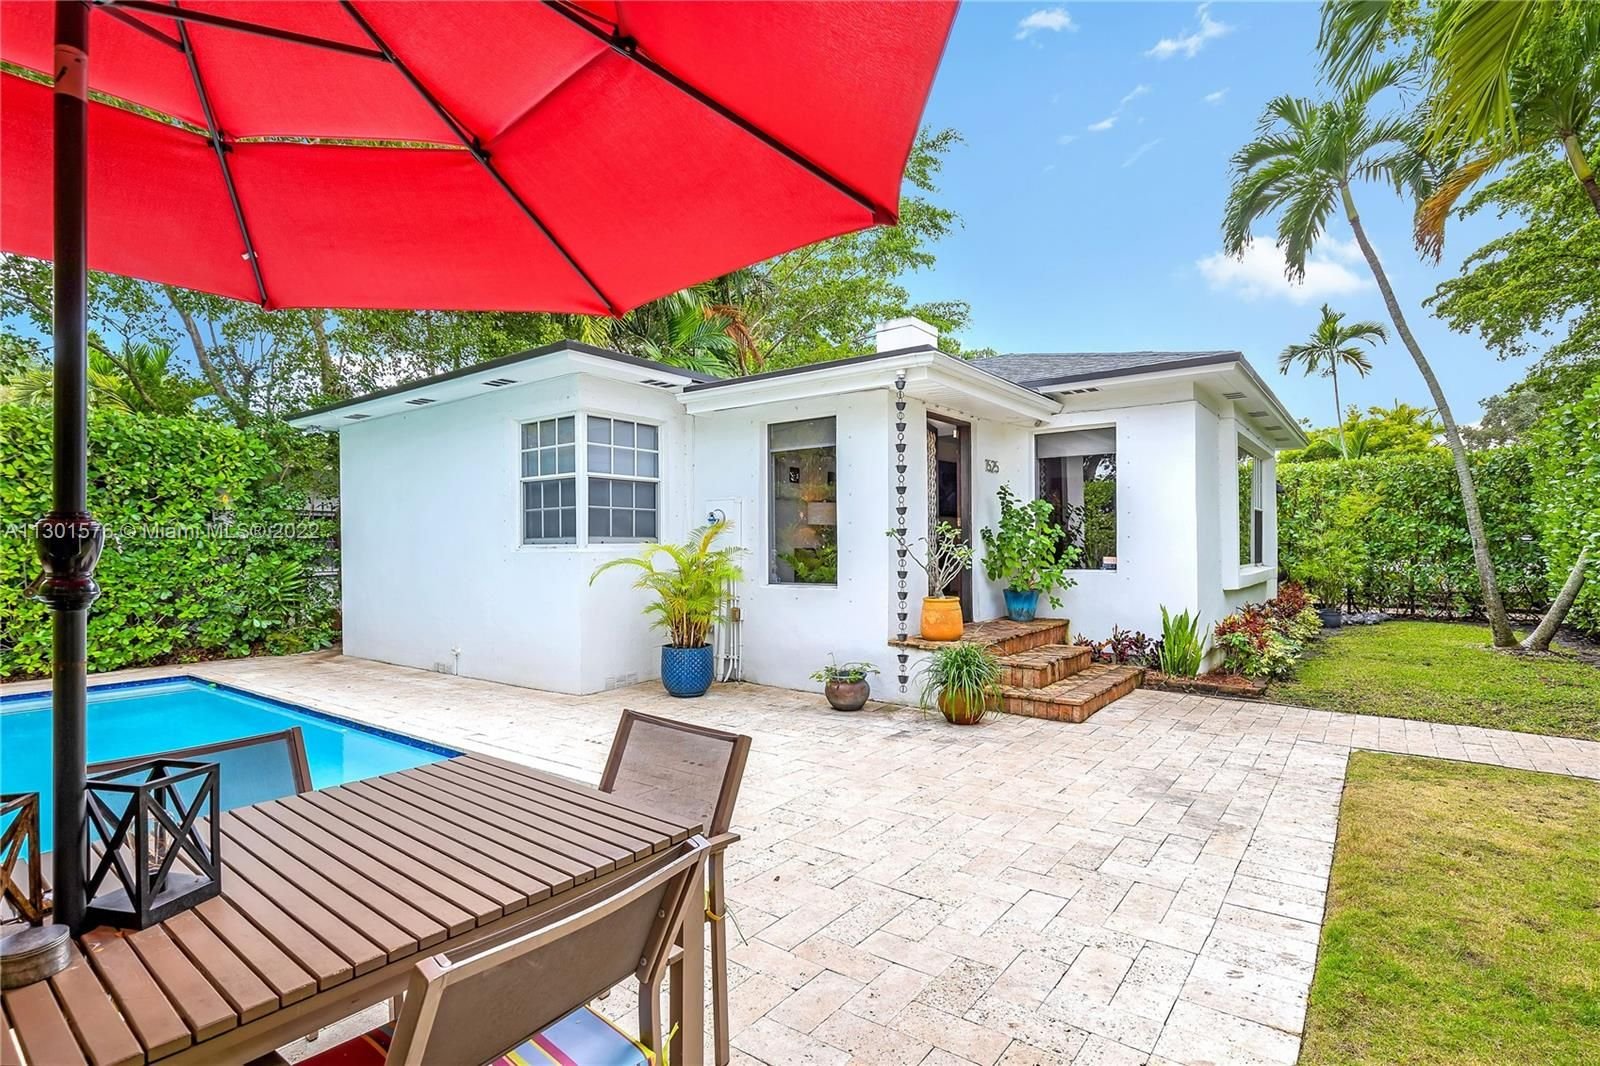 Real estate property located at 1525 13th Ave, Miami-Dade County, Miami, FL